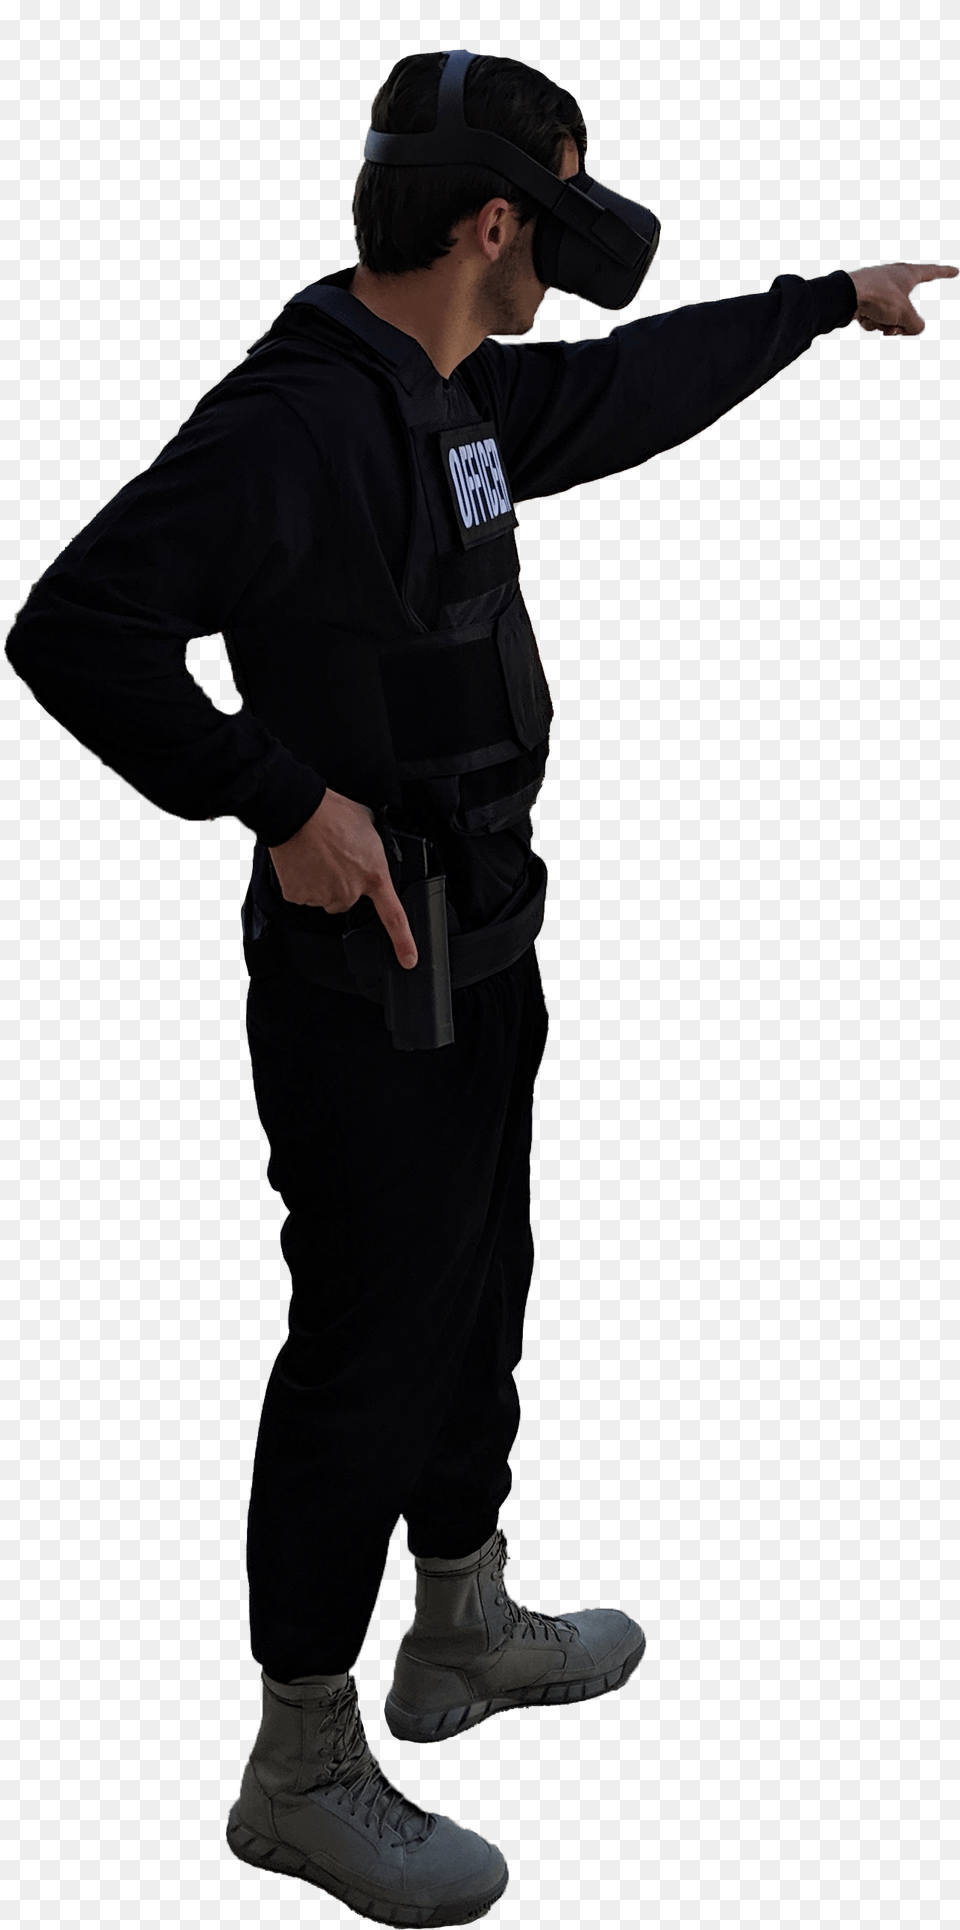 Police Officer Training In Virtual Reality Standing, Weapon, Handgun, Gun, Firearm Free Png Download